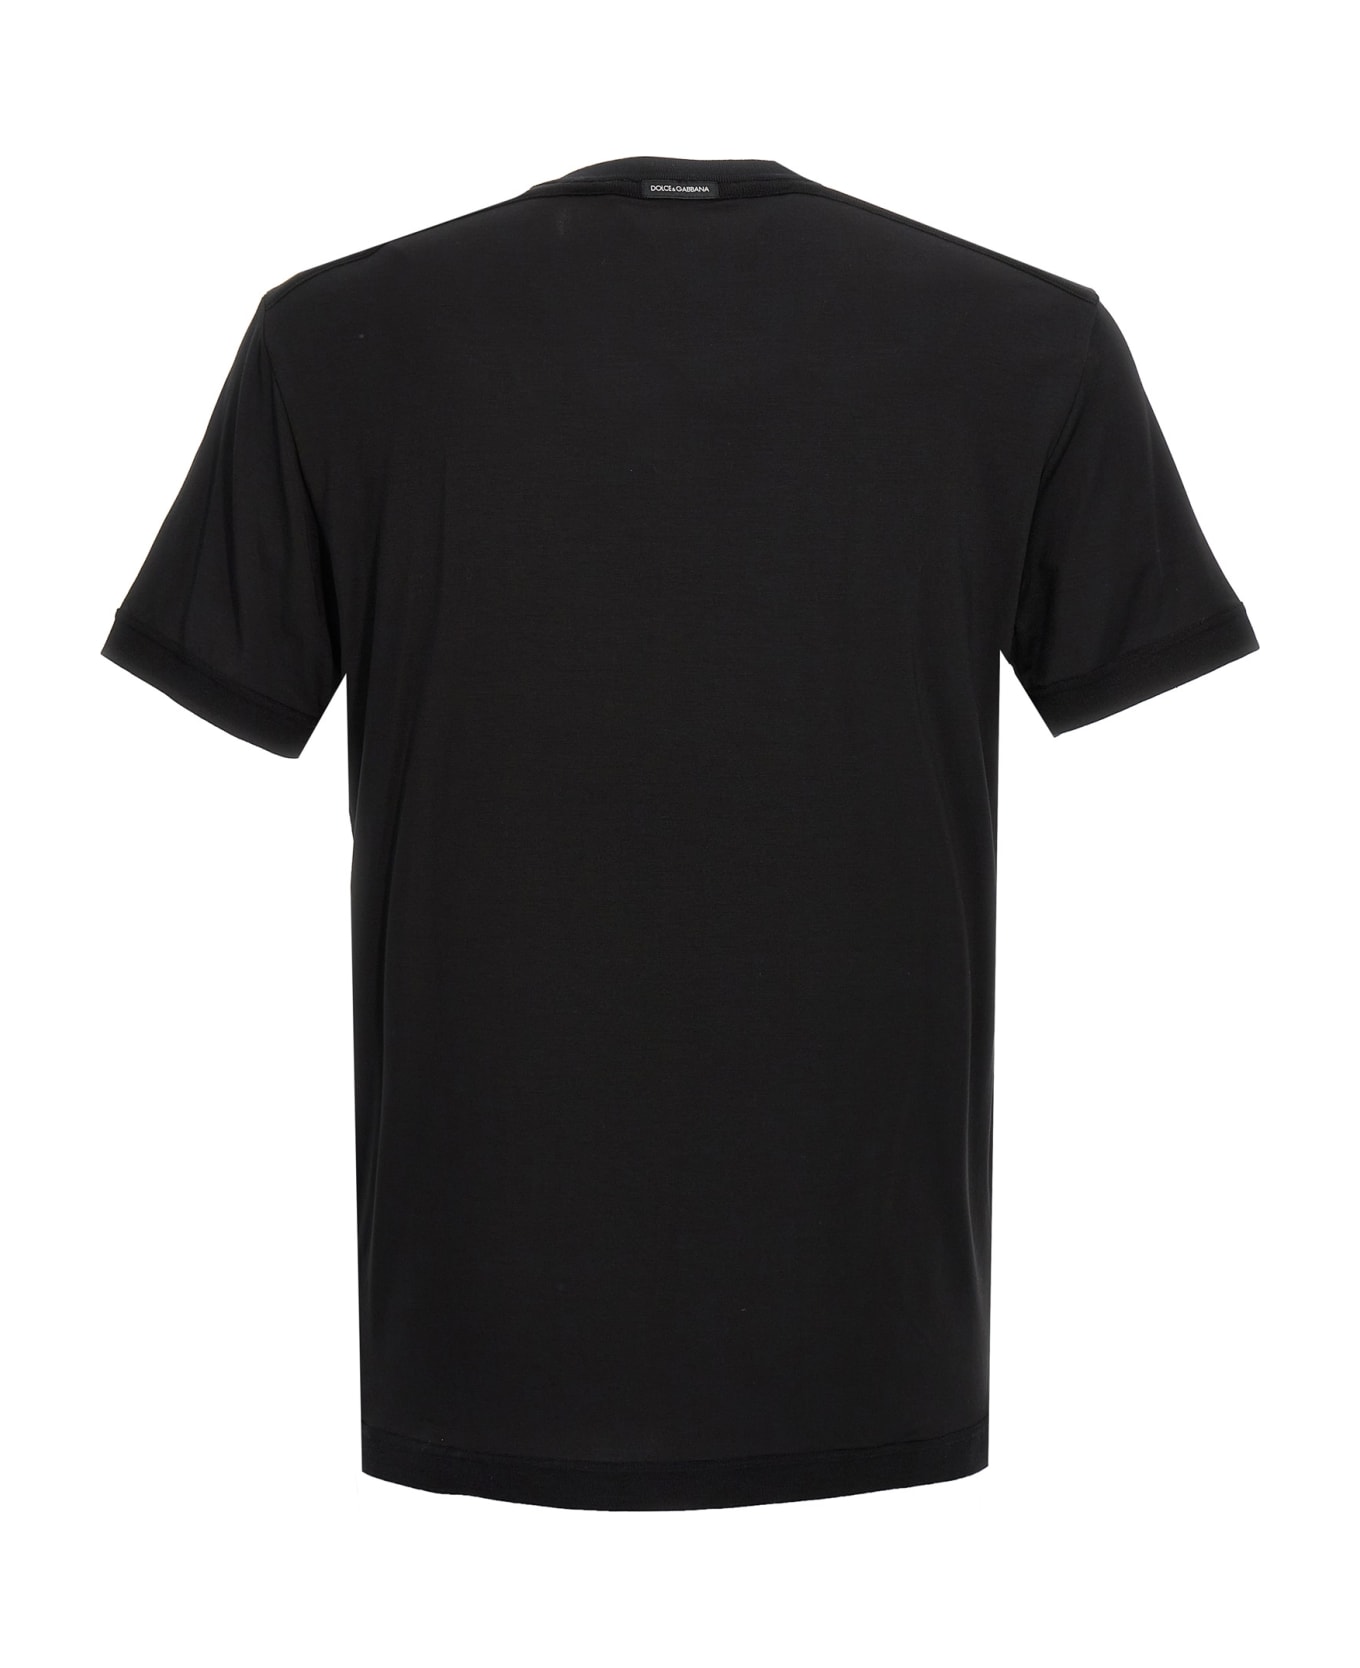 Dolce & Gabbana Stretch Viscose Blend T-shirt - Black